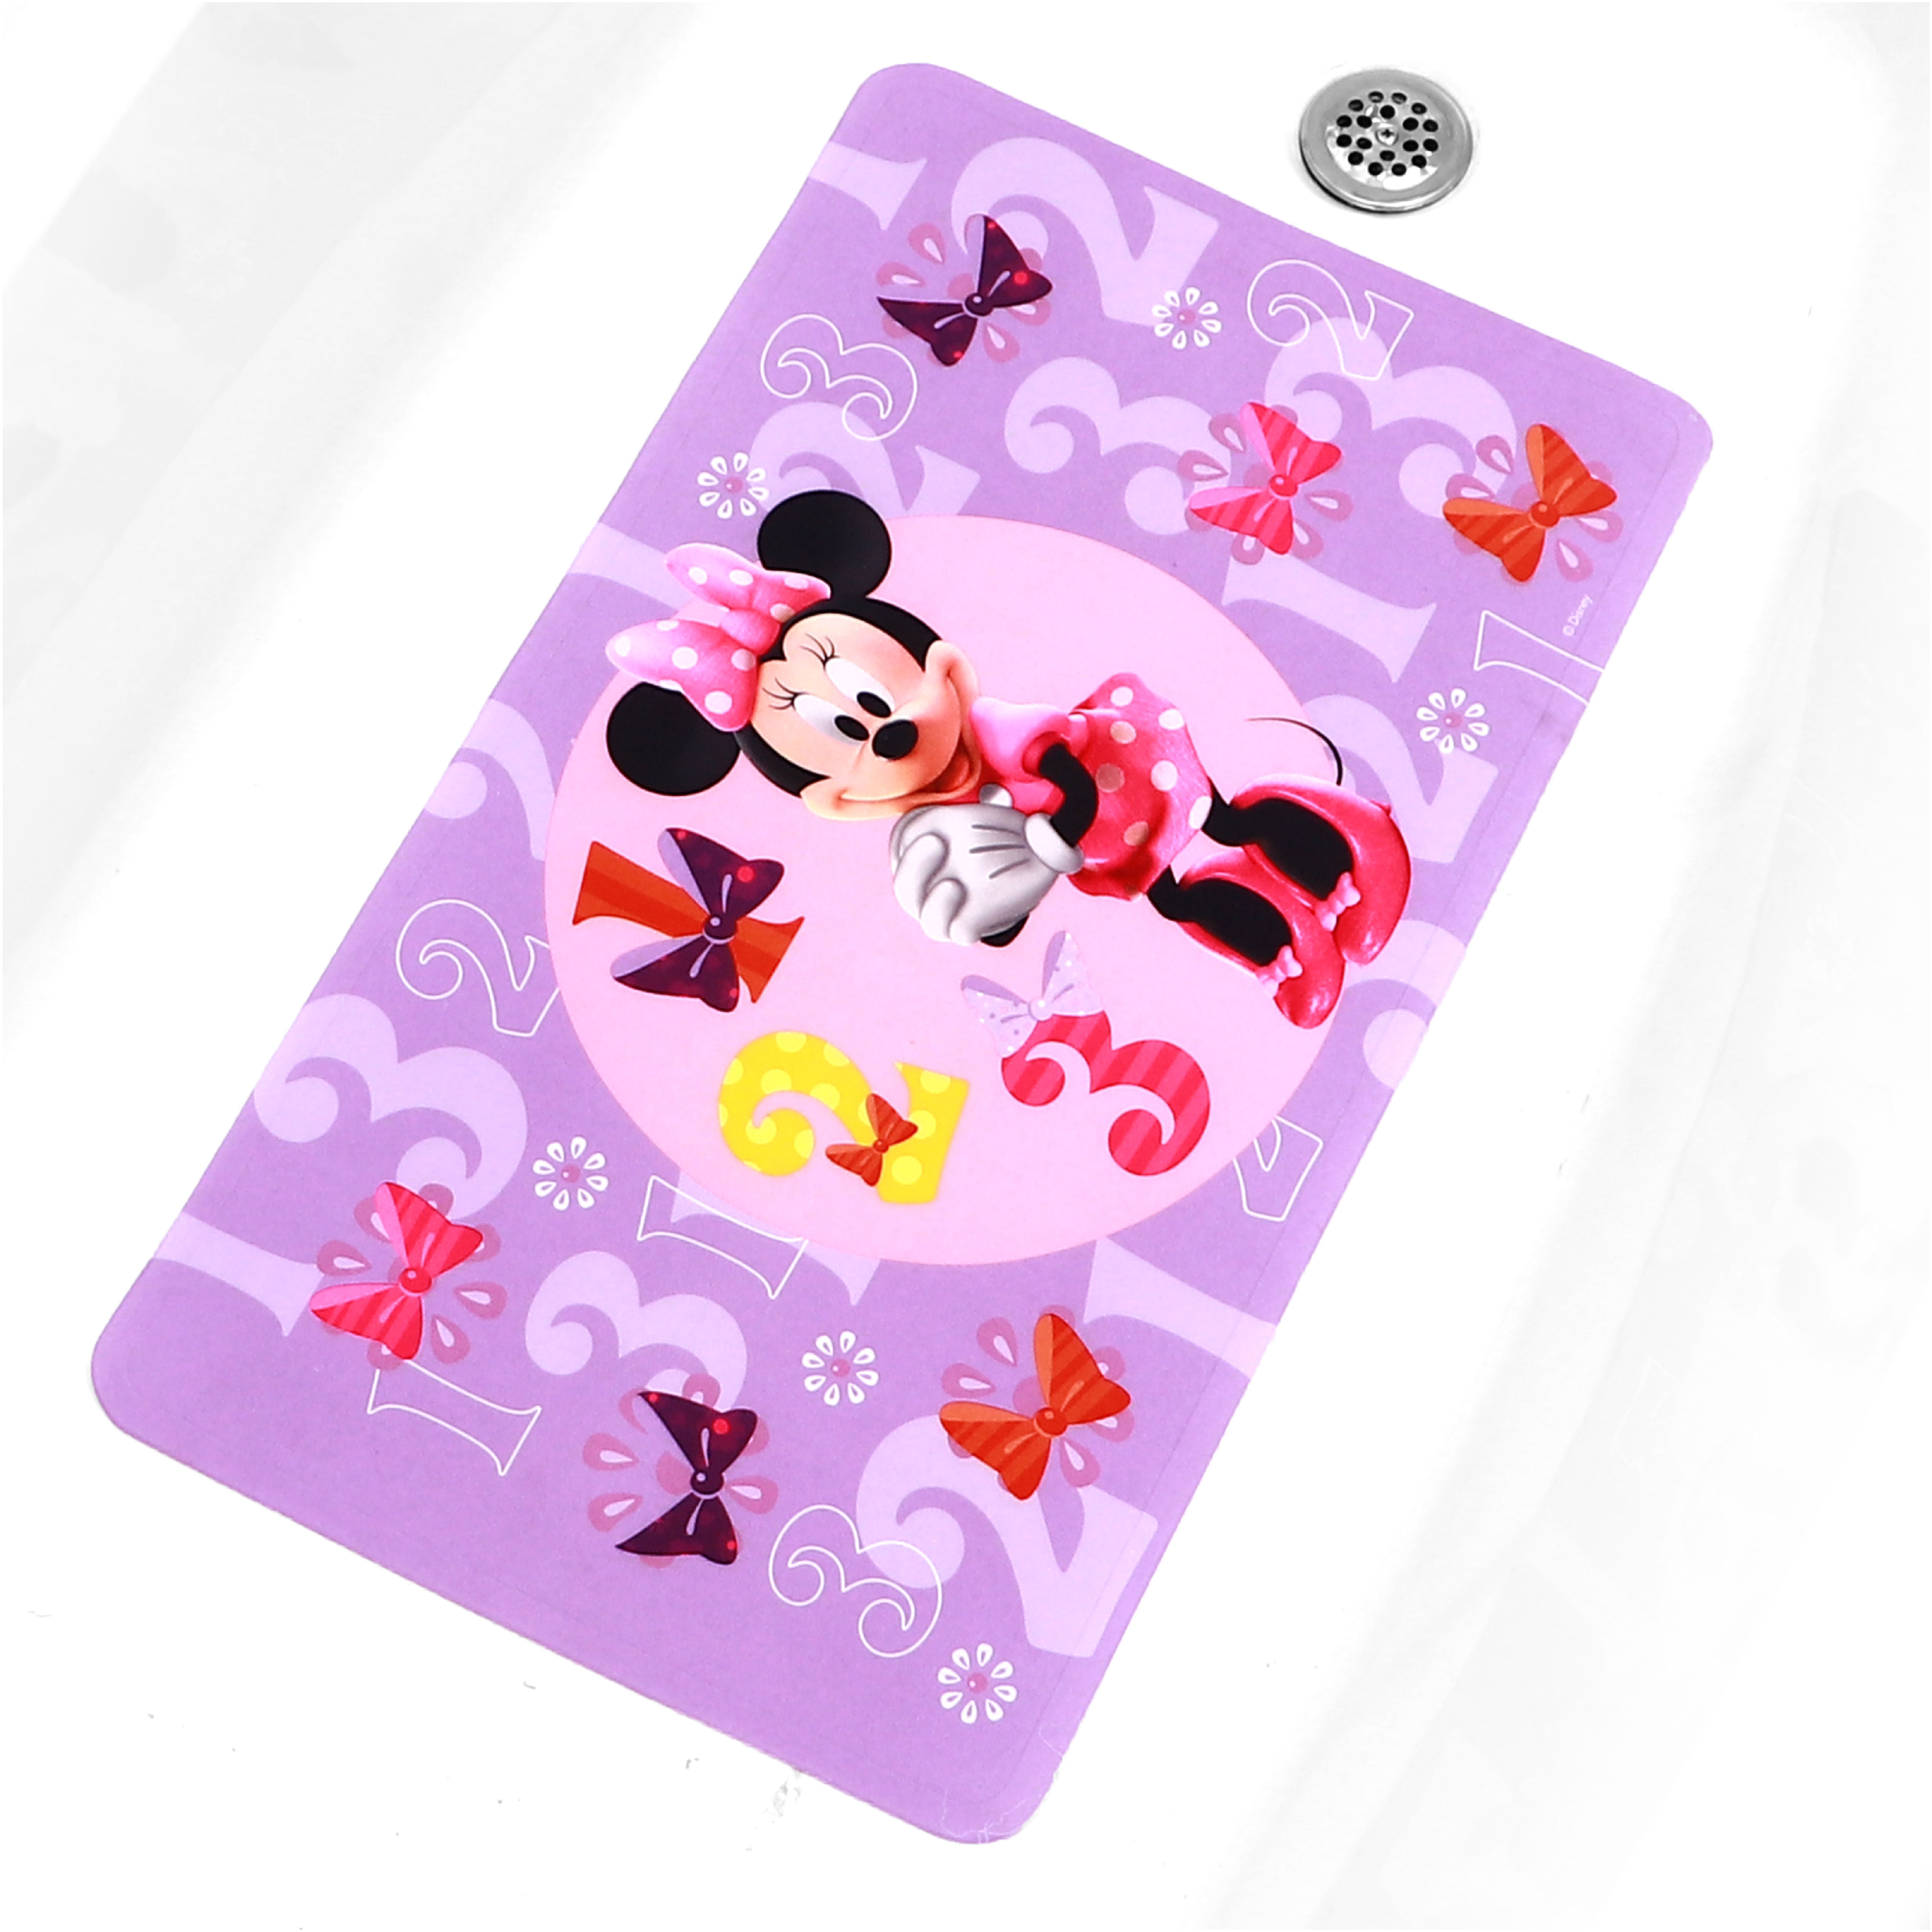 Disney baby MINNIE MOUSE Bath Mat Kids Bathroom Suction Cup 69cm x 40cm Minnie 